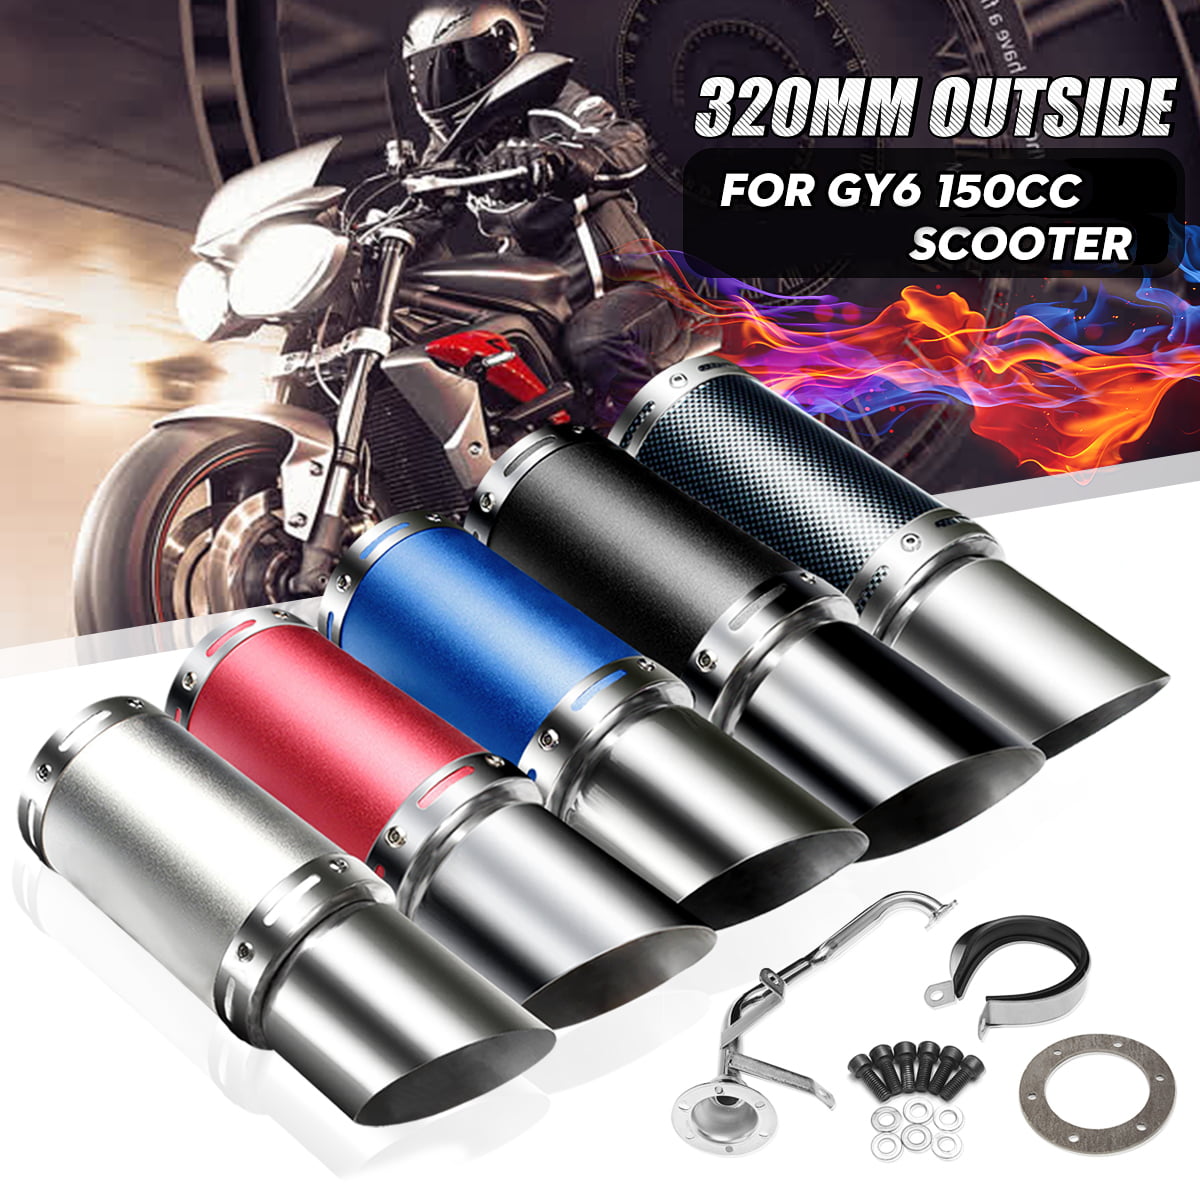 32mm universal stainless steel motorcycle atv exhaust silencer muffler pipe 